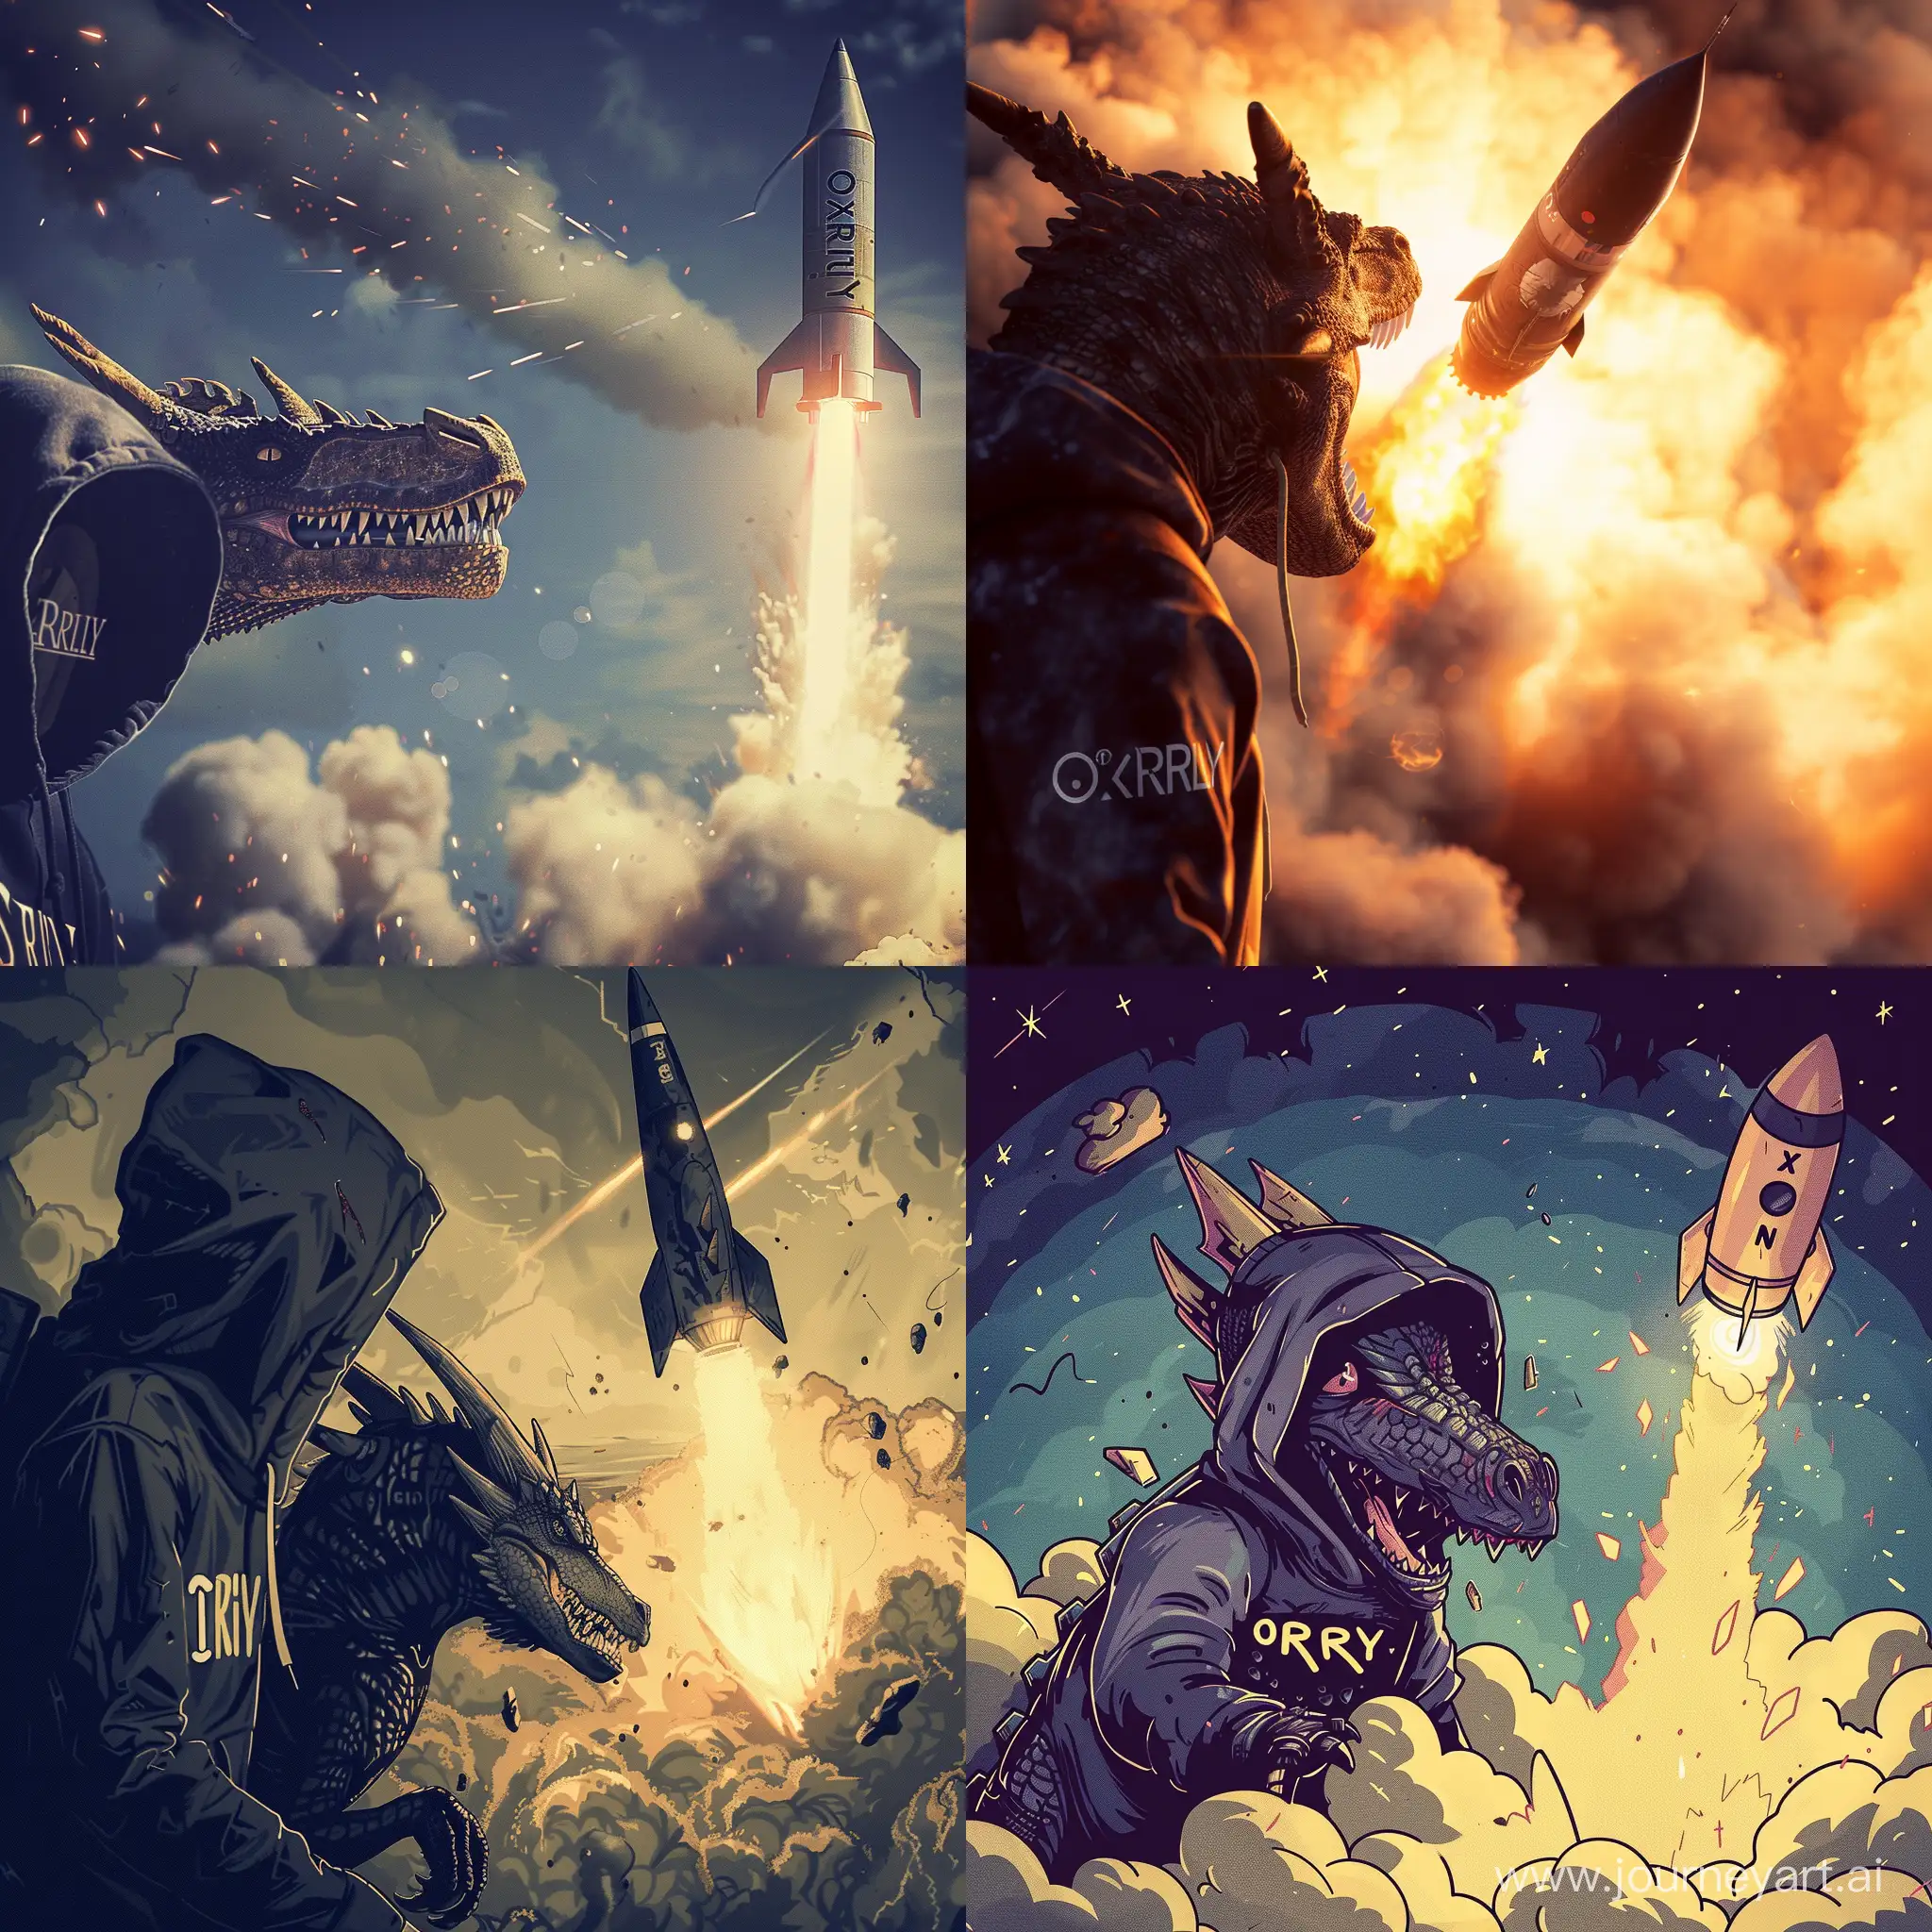 Digital-Art-Dragon-in-0xRiley-Hoodie-Evading-Rocket-Attack-NFT